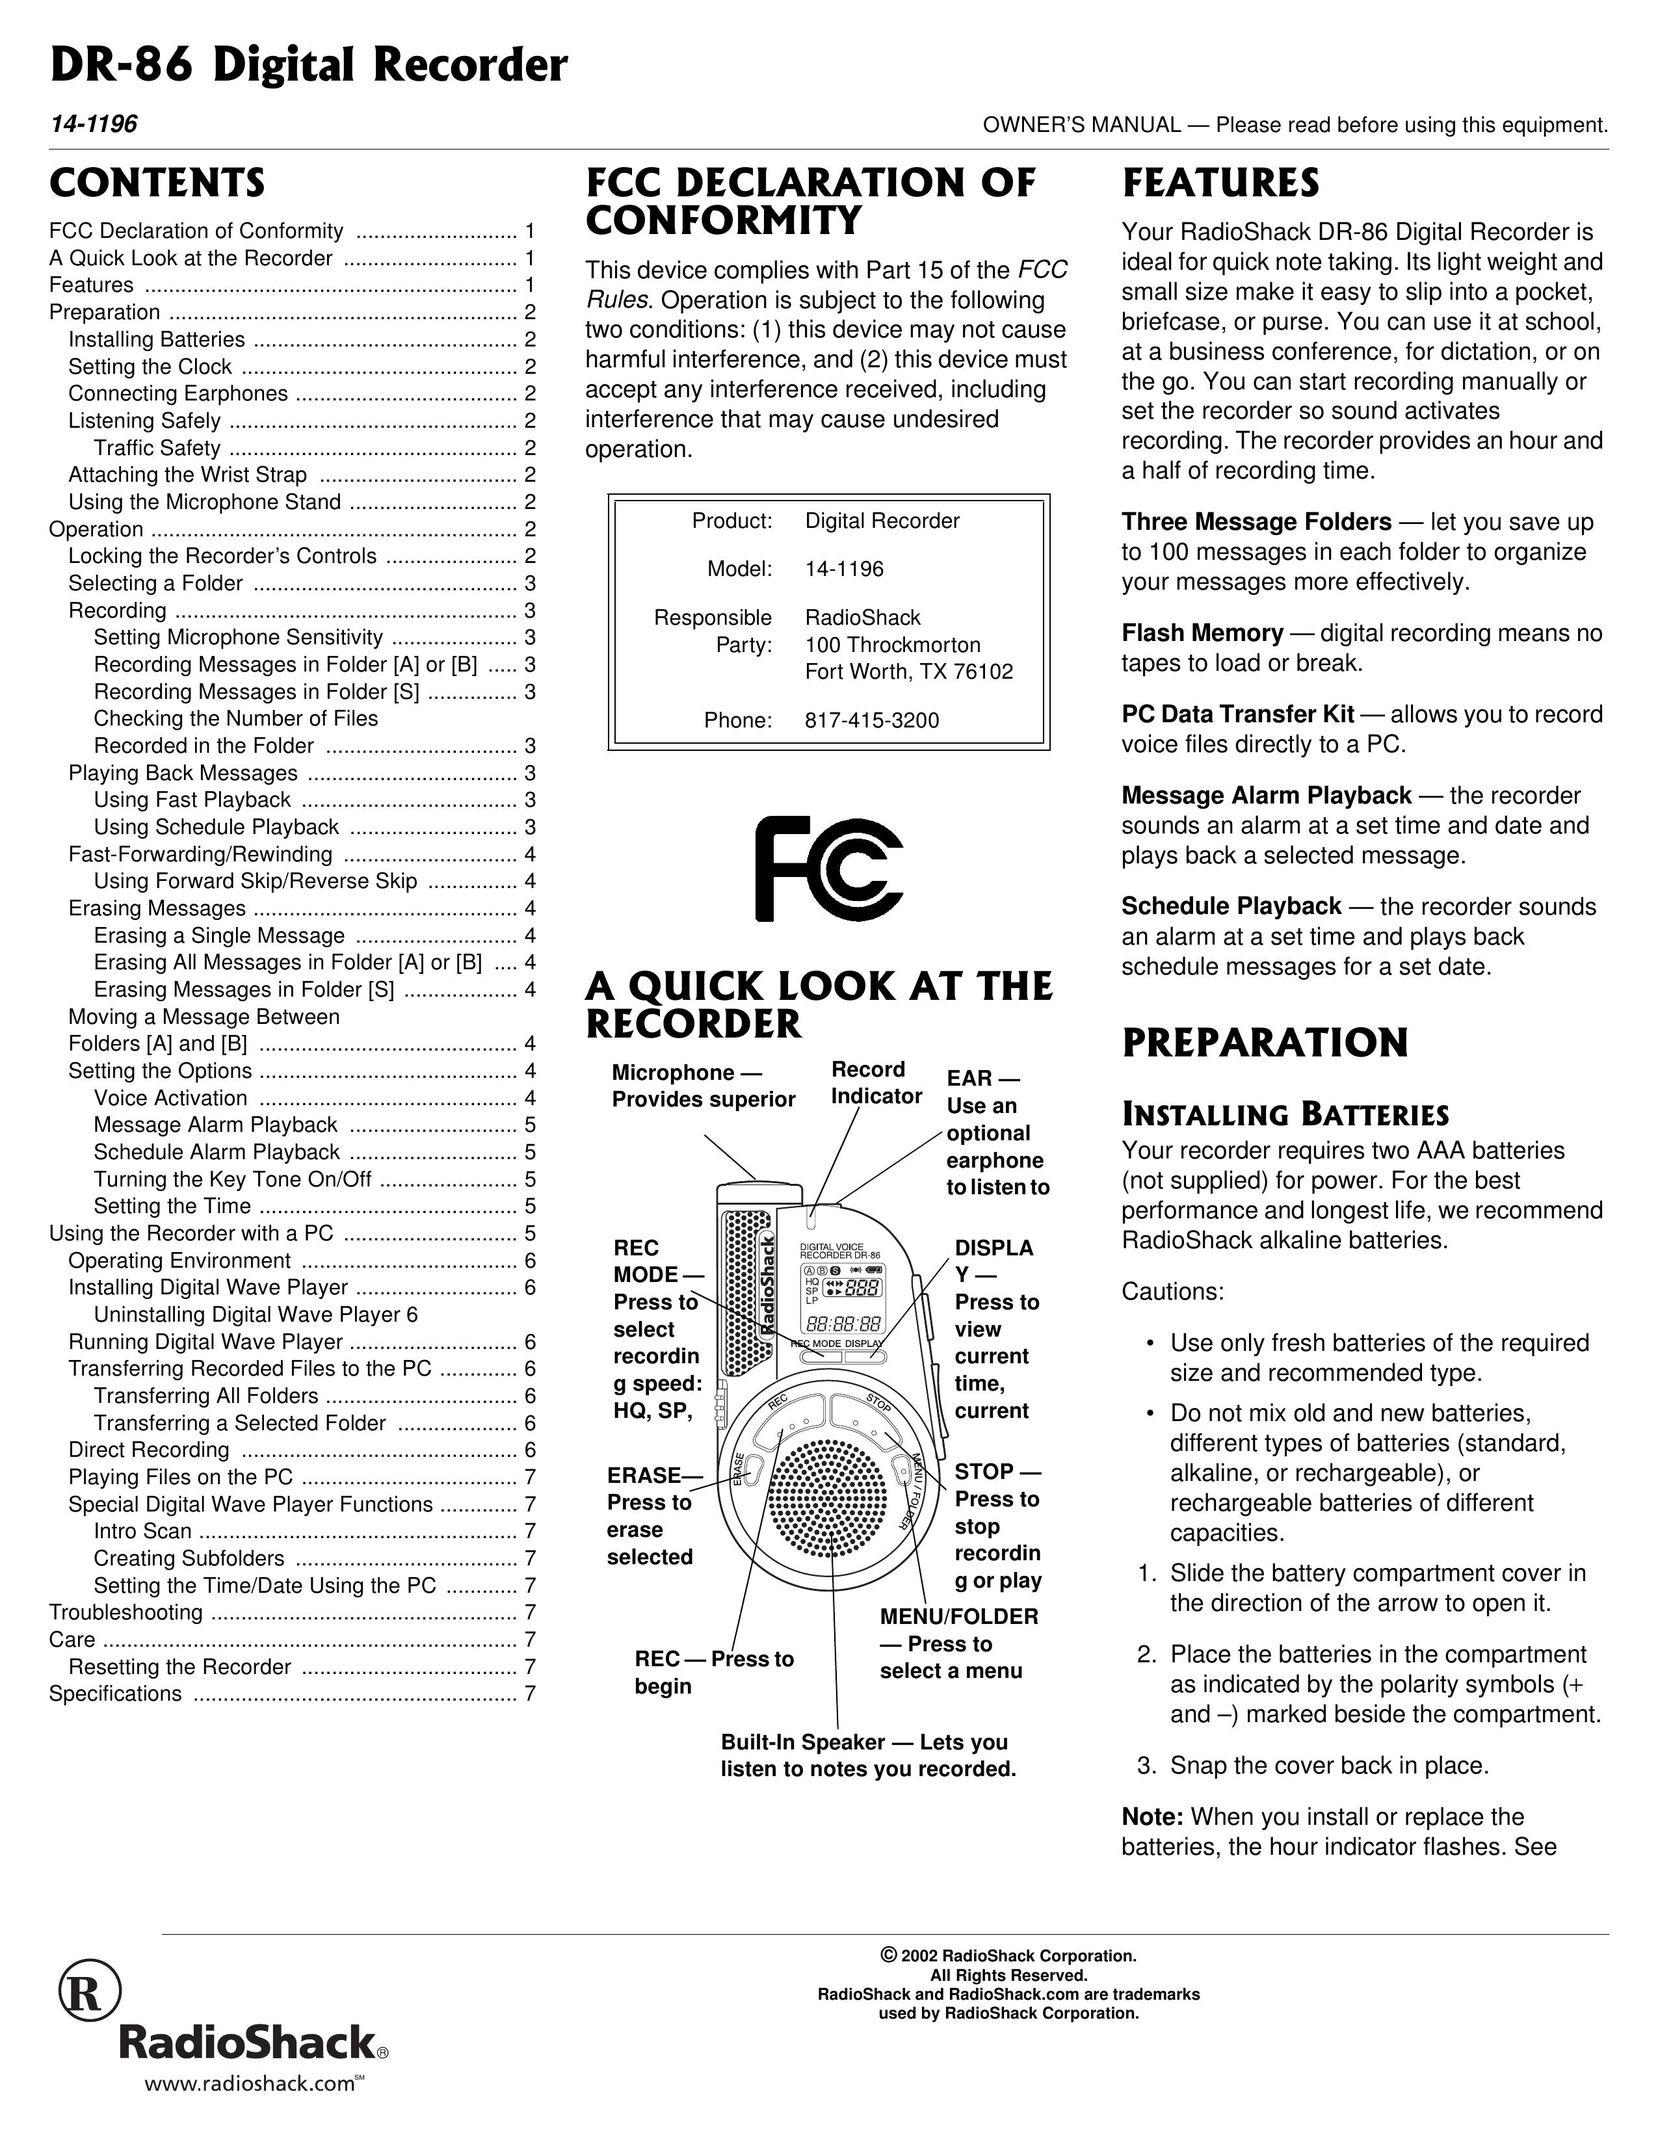 Samsung 14-1196 Microcassette Recorder User Manual